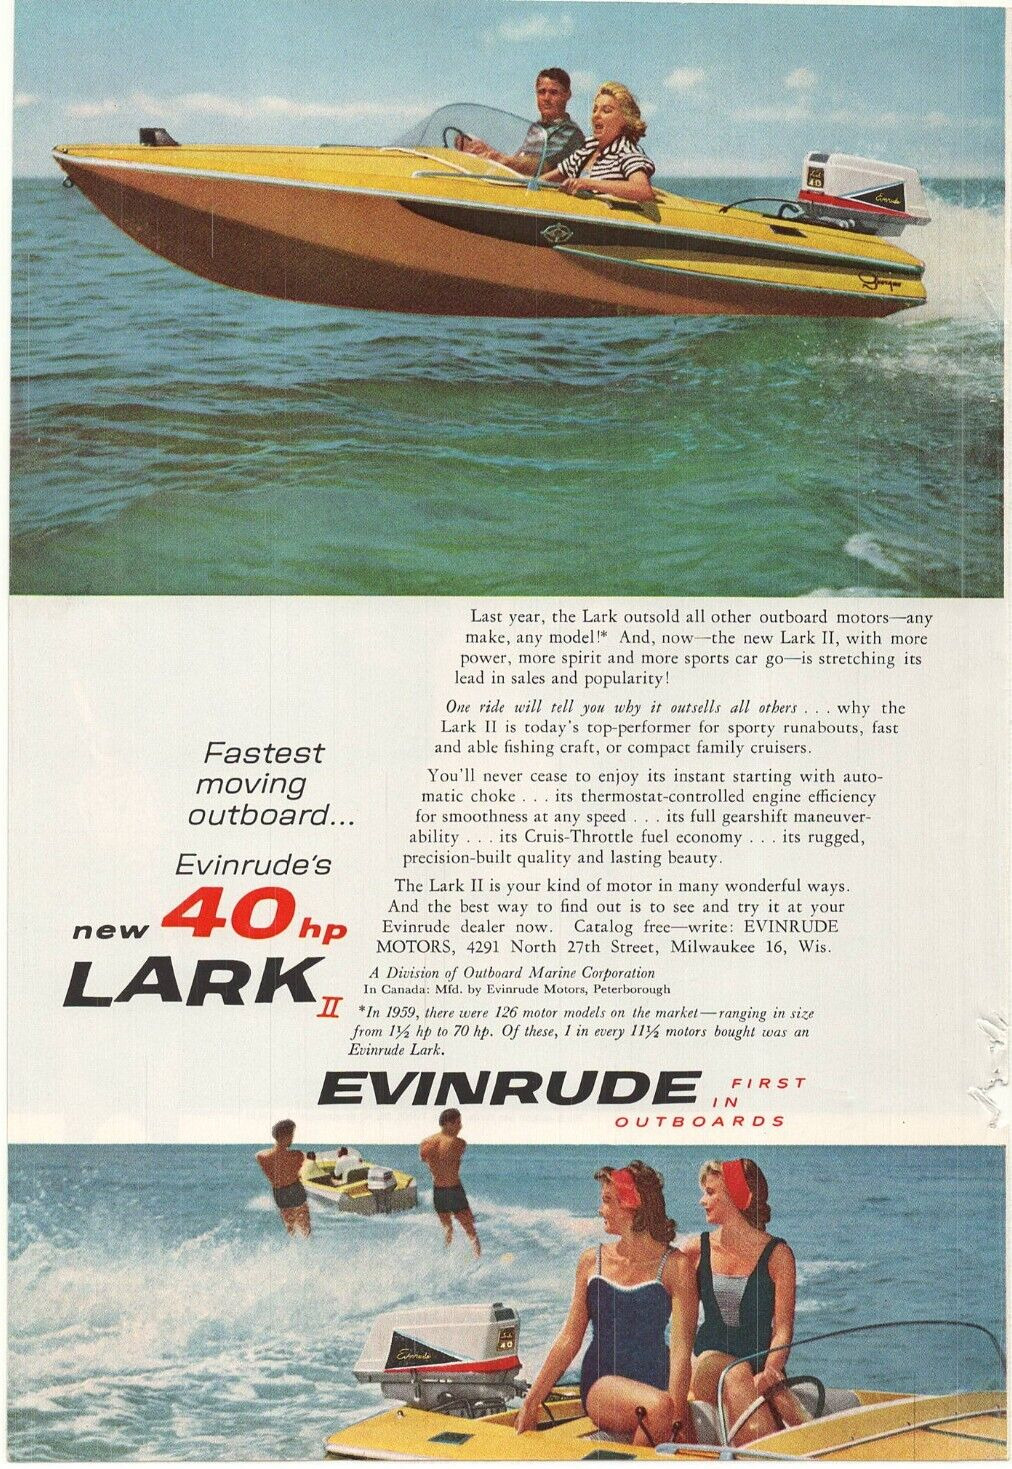 1960 Print Ad Evinrude Outboard Motor 40 hp Lark II Fastest moving outboard